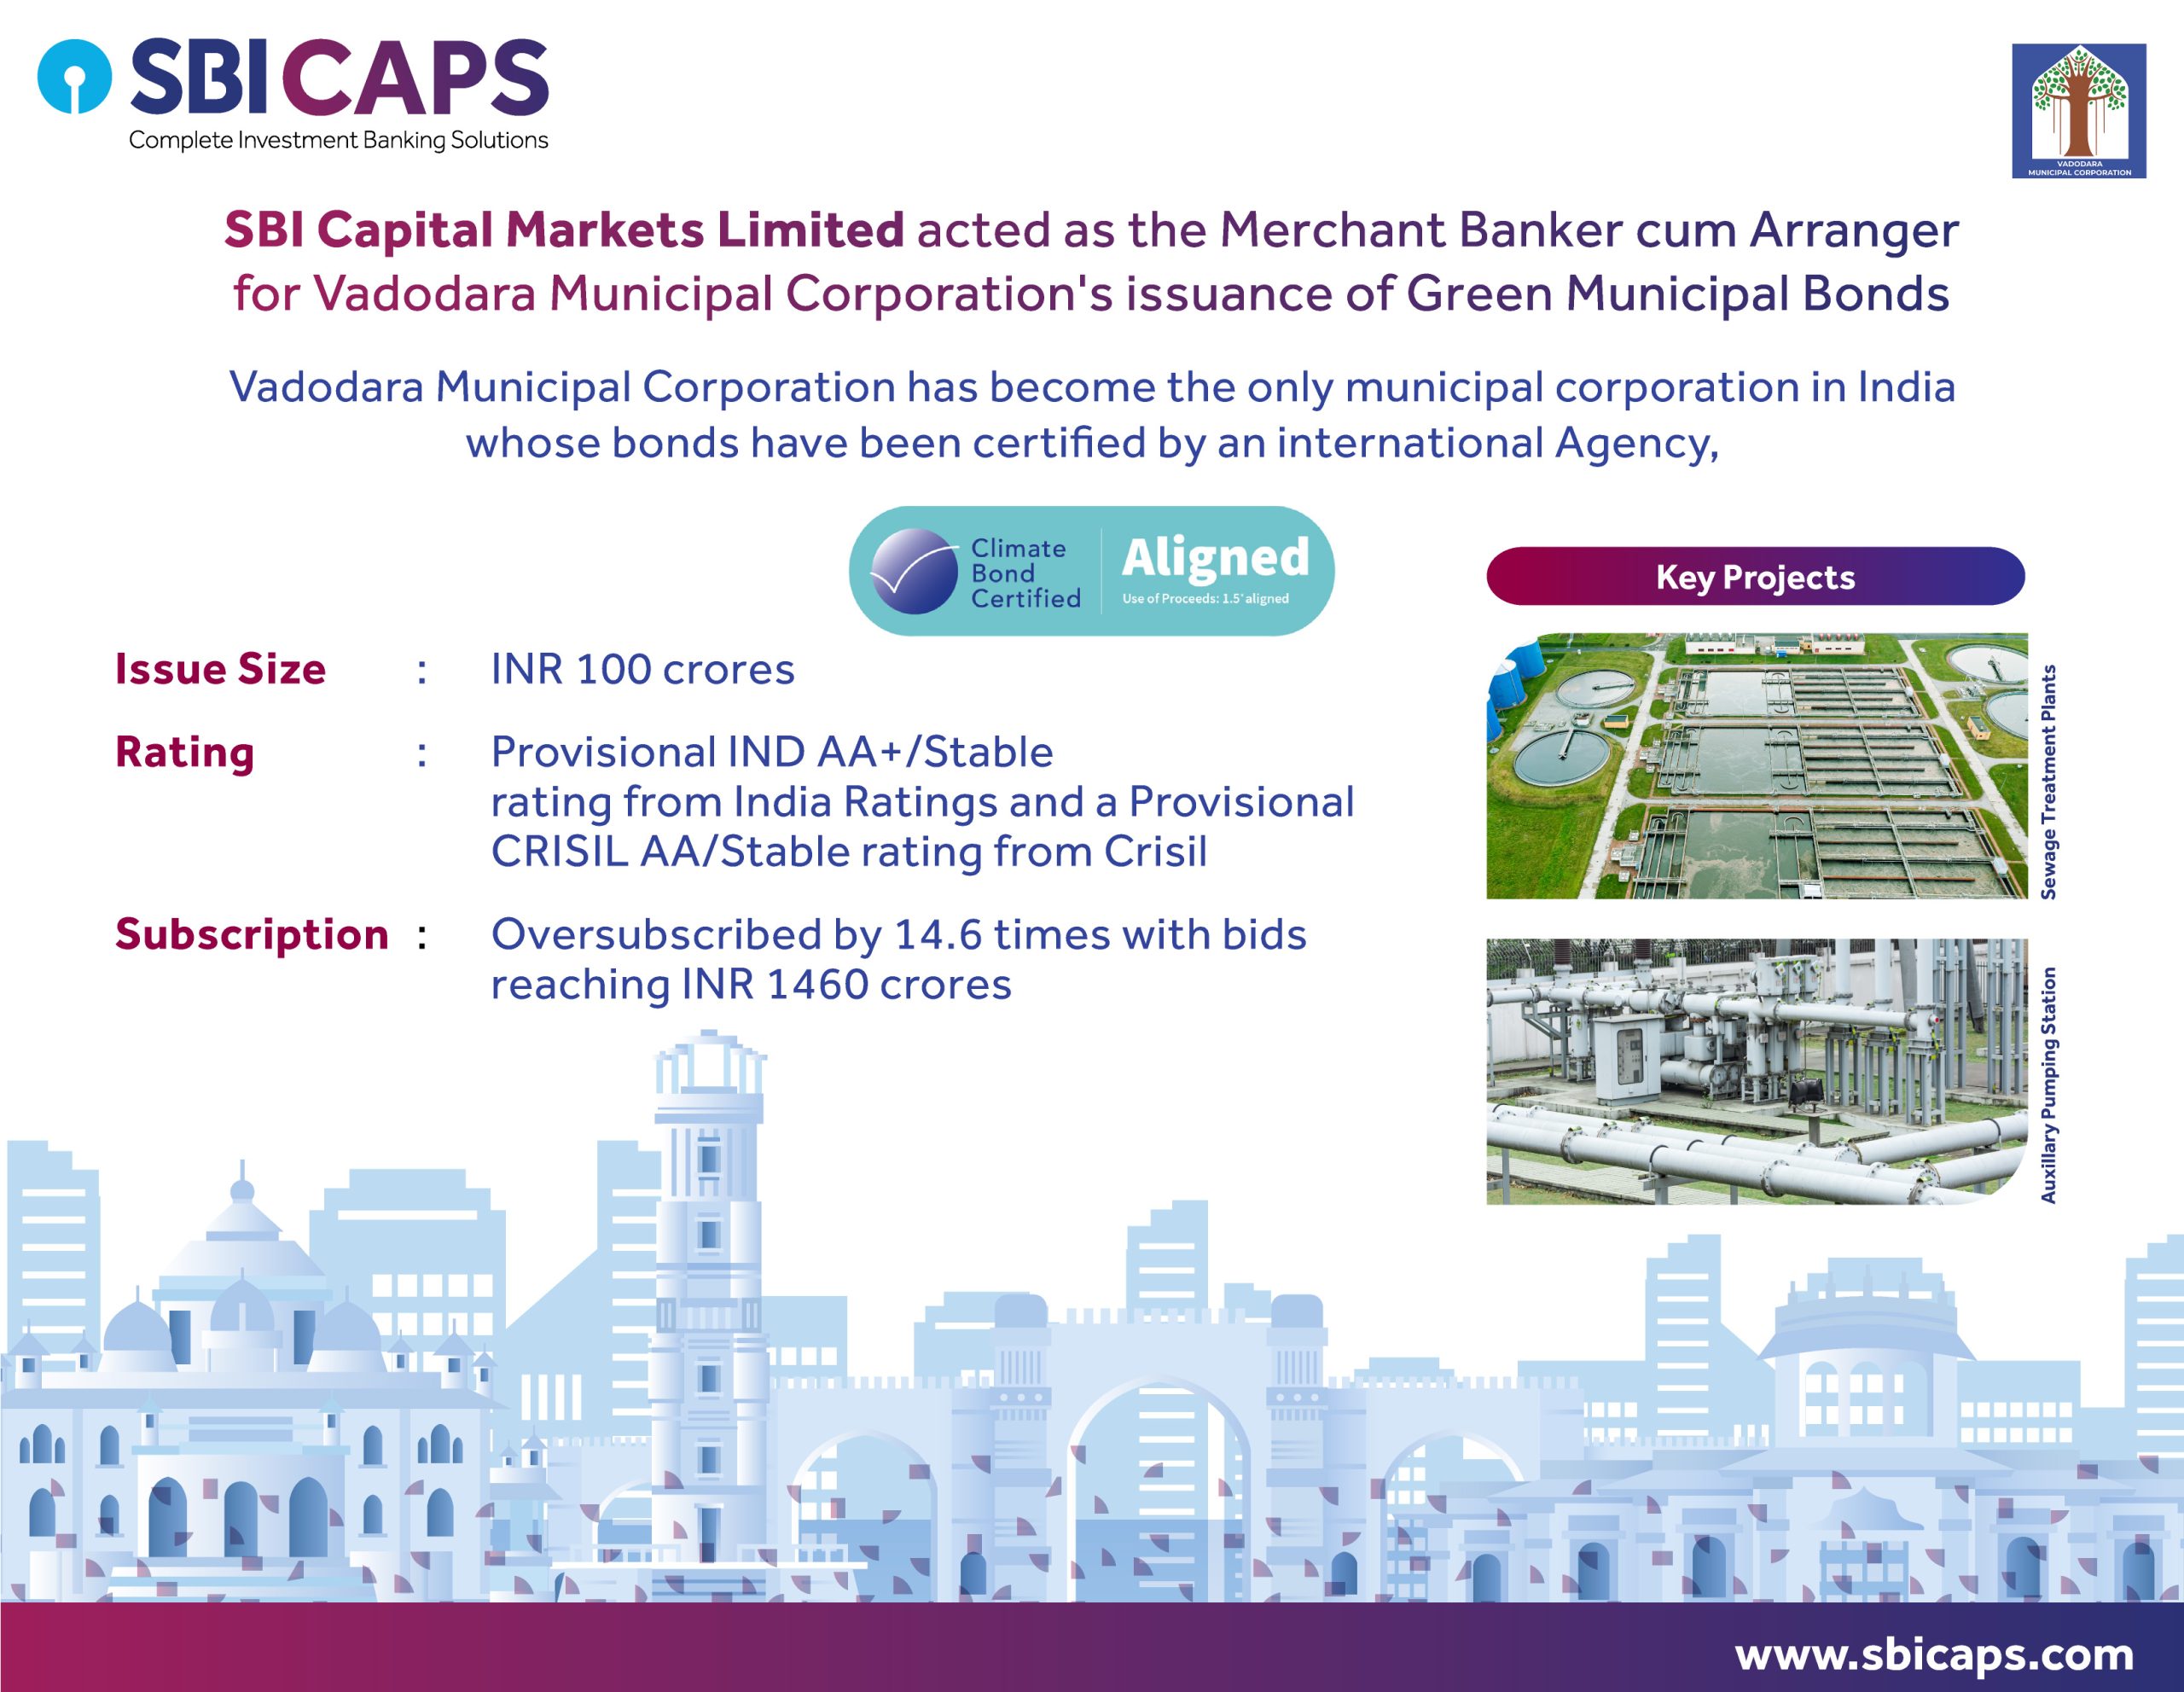 SBICAPS acted as the Merchant Banker cum Arranger for Vadodara Municipal Corporation’s issuance of Green Municipal Bonds.